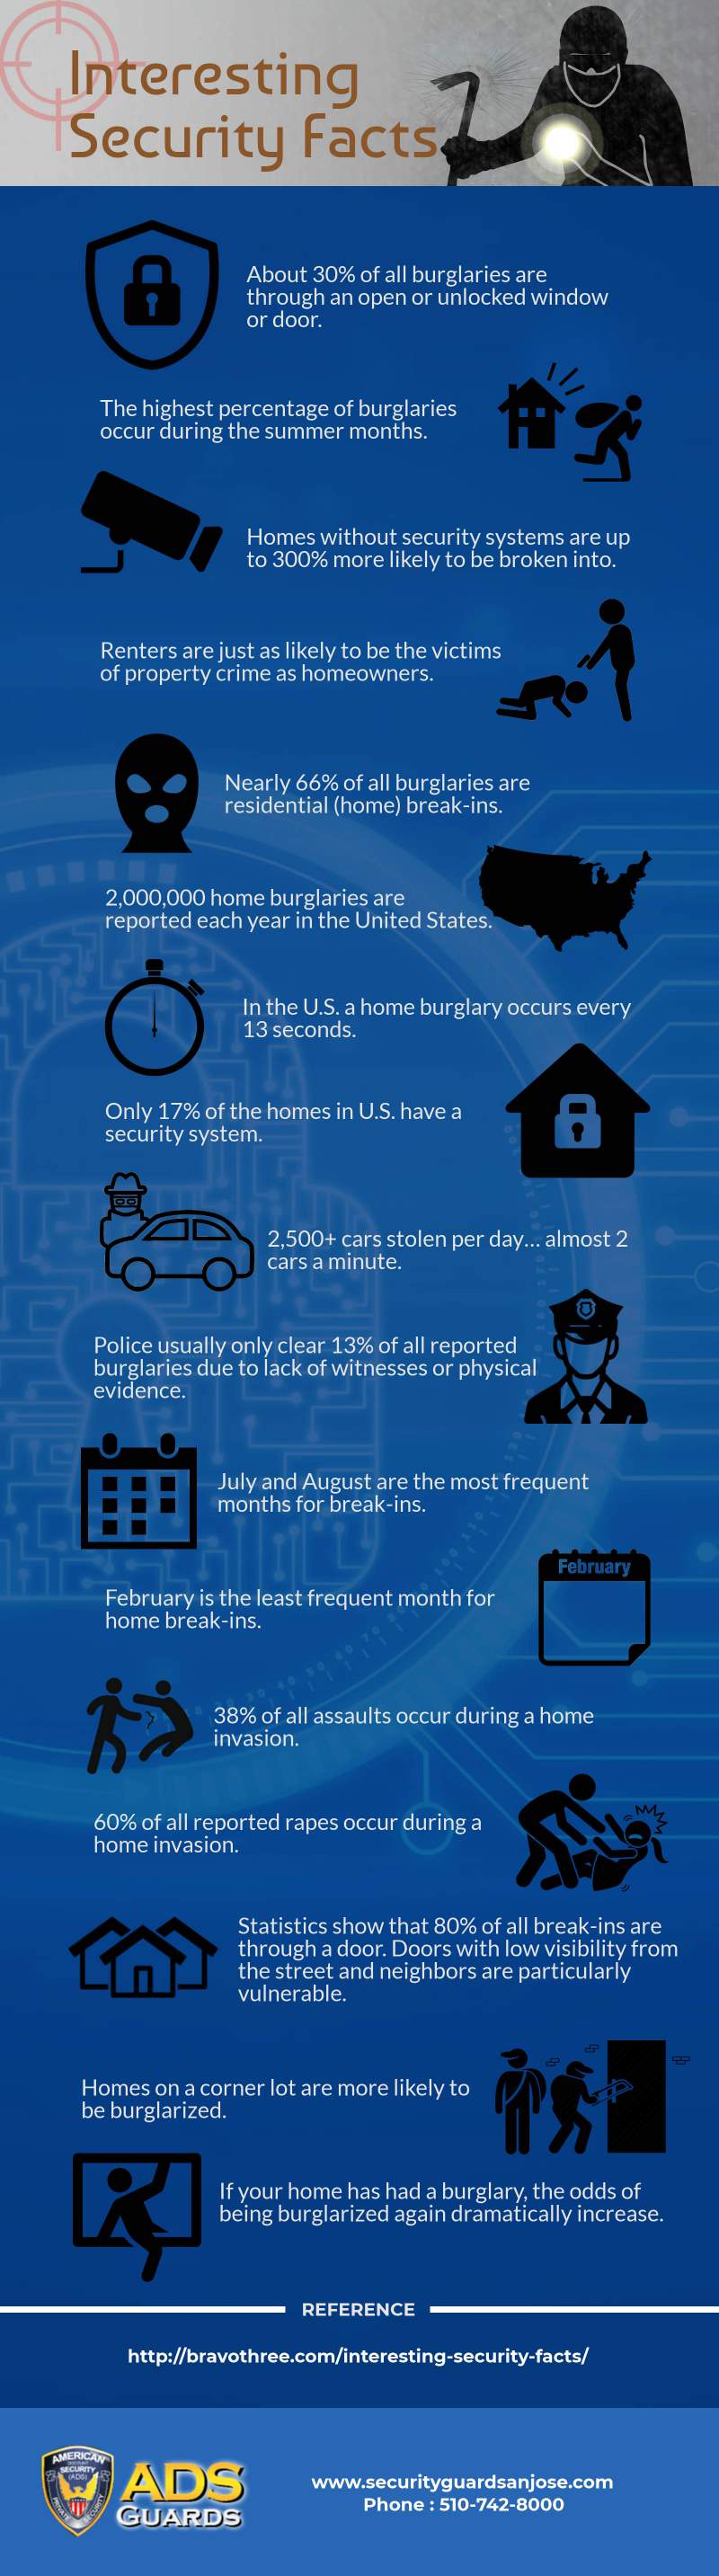 Security Stats on Home Burglaries